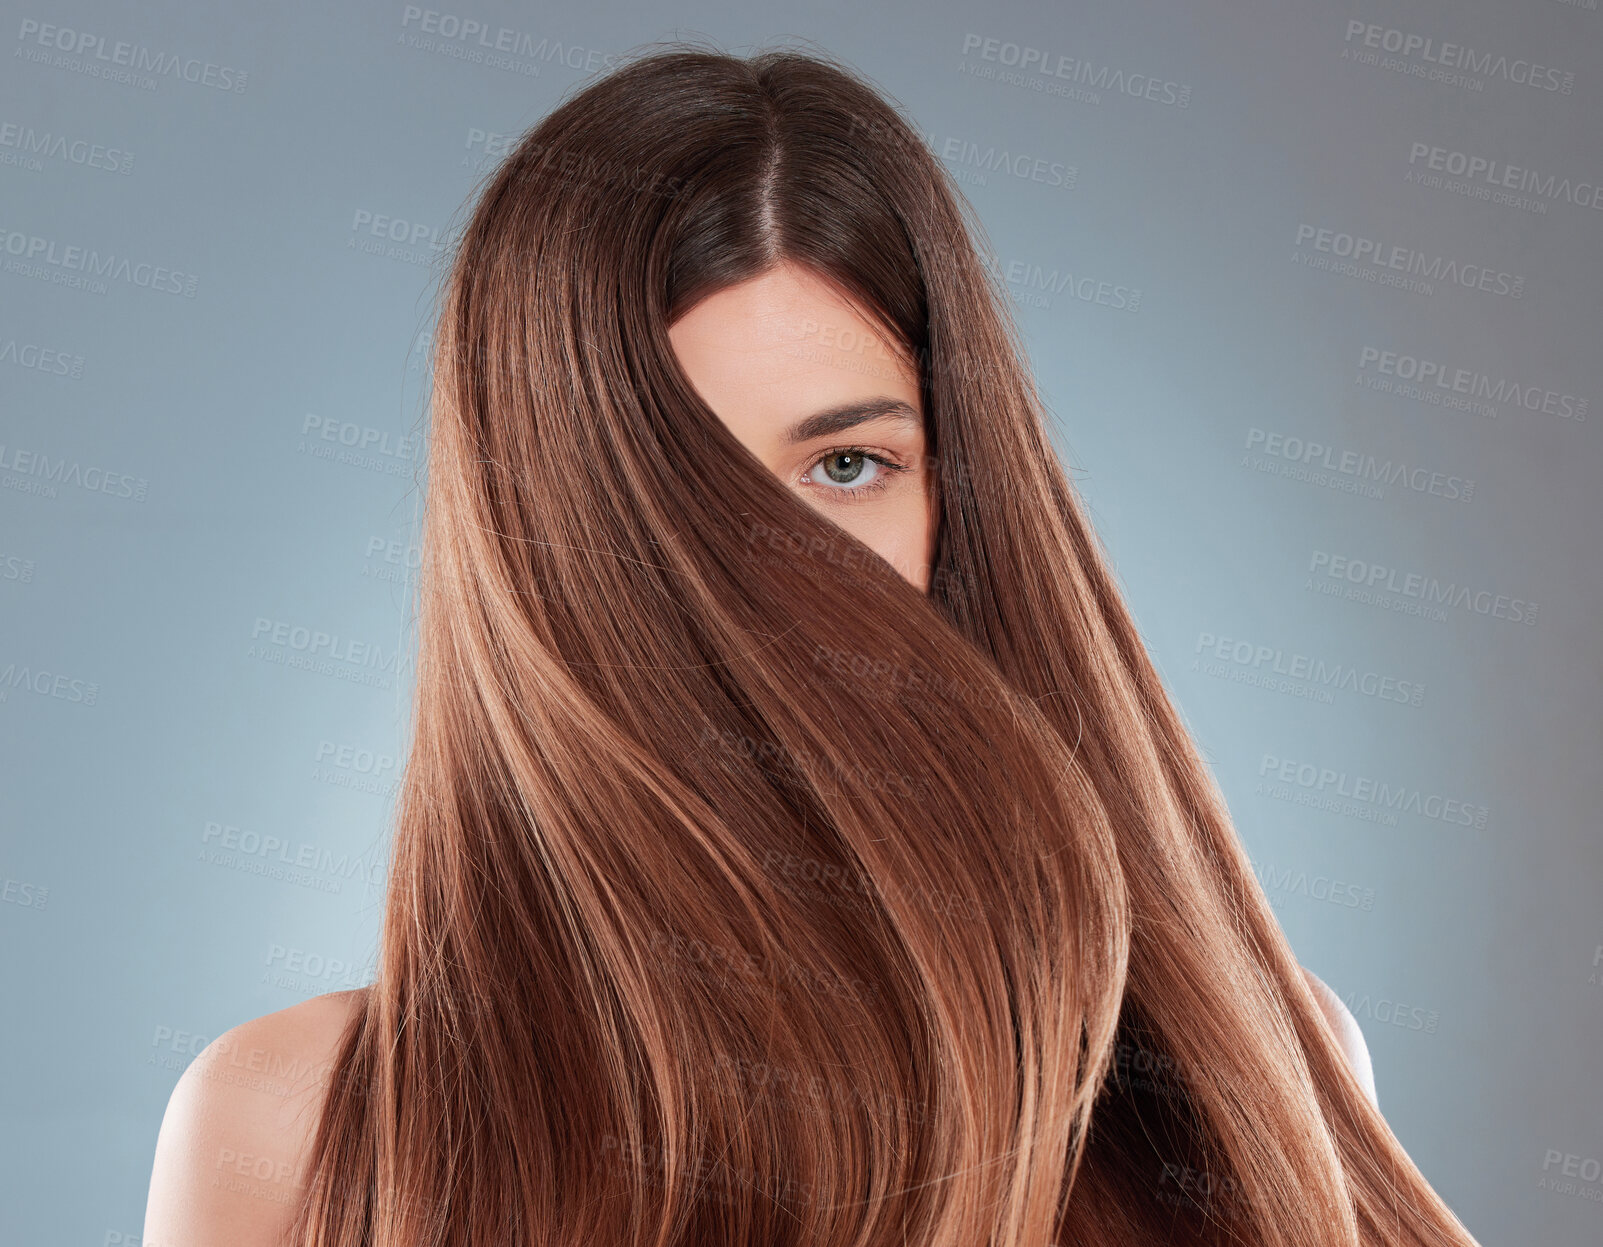 Buy stock photo Studio shot of a beautiful young woman showing off her long brown hair